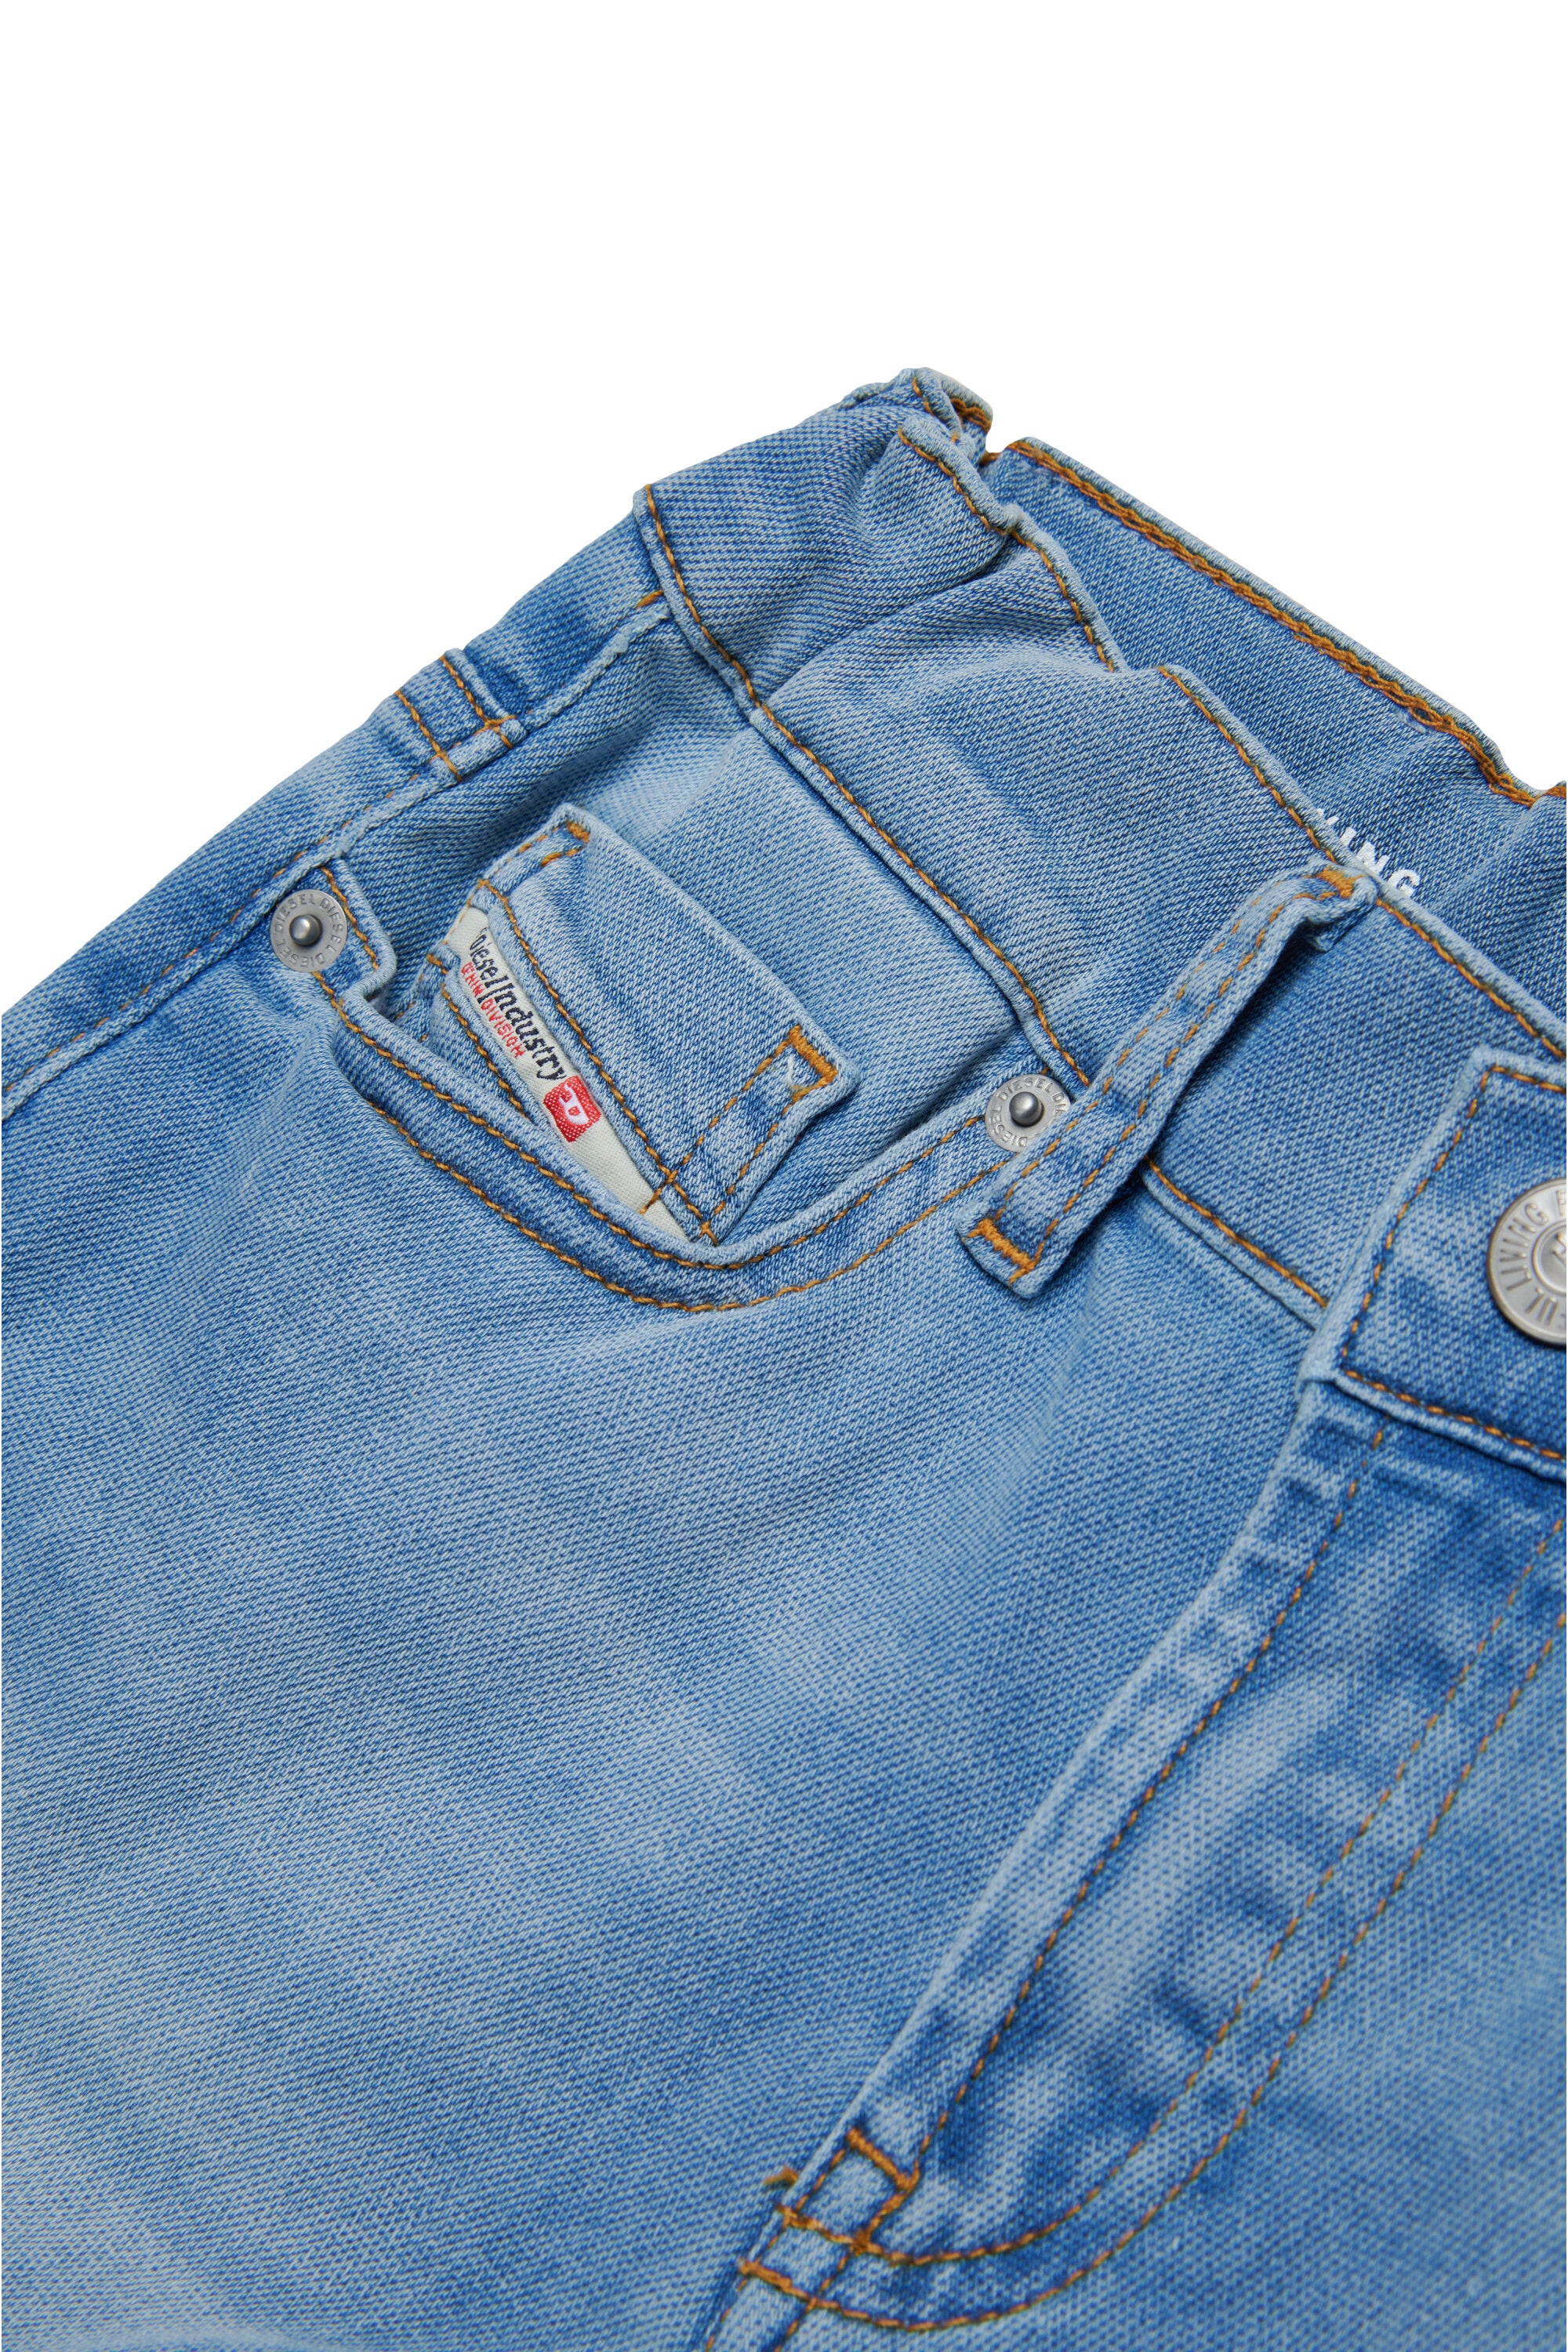 Pantalones cortos JoggJeans® enrollables